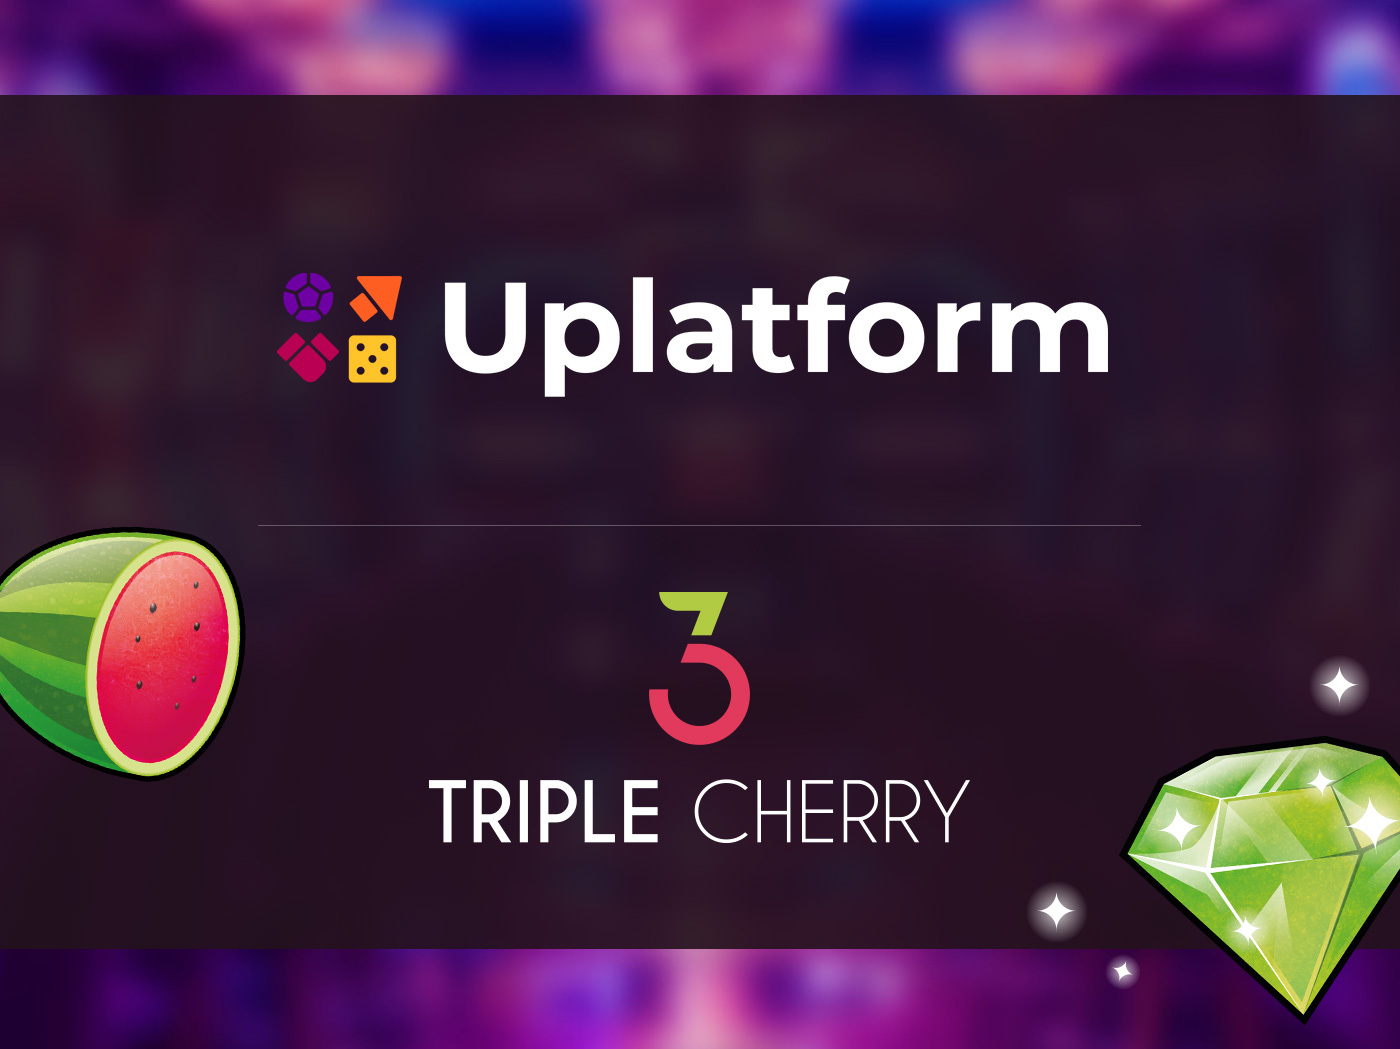 Uplatform and Triple Cherry Partnership